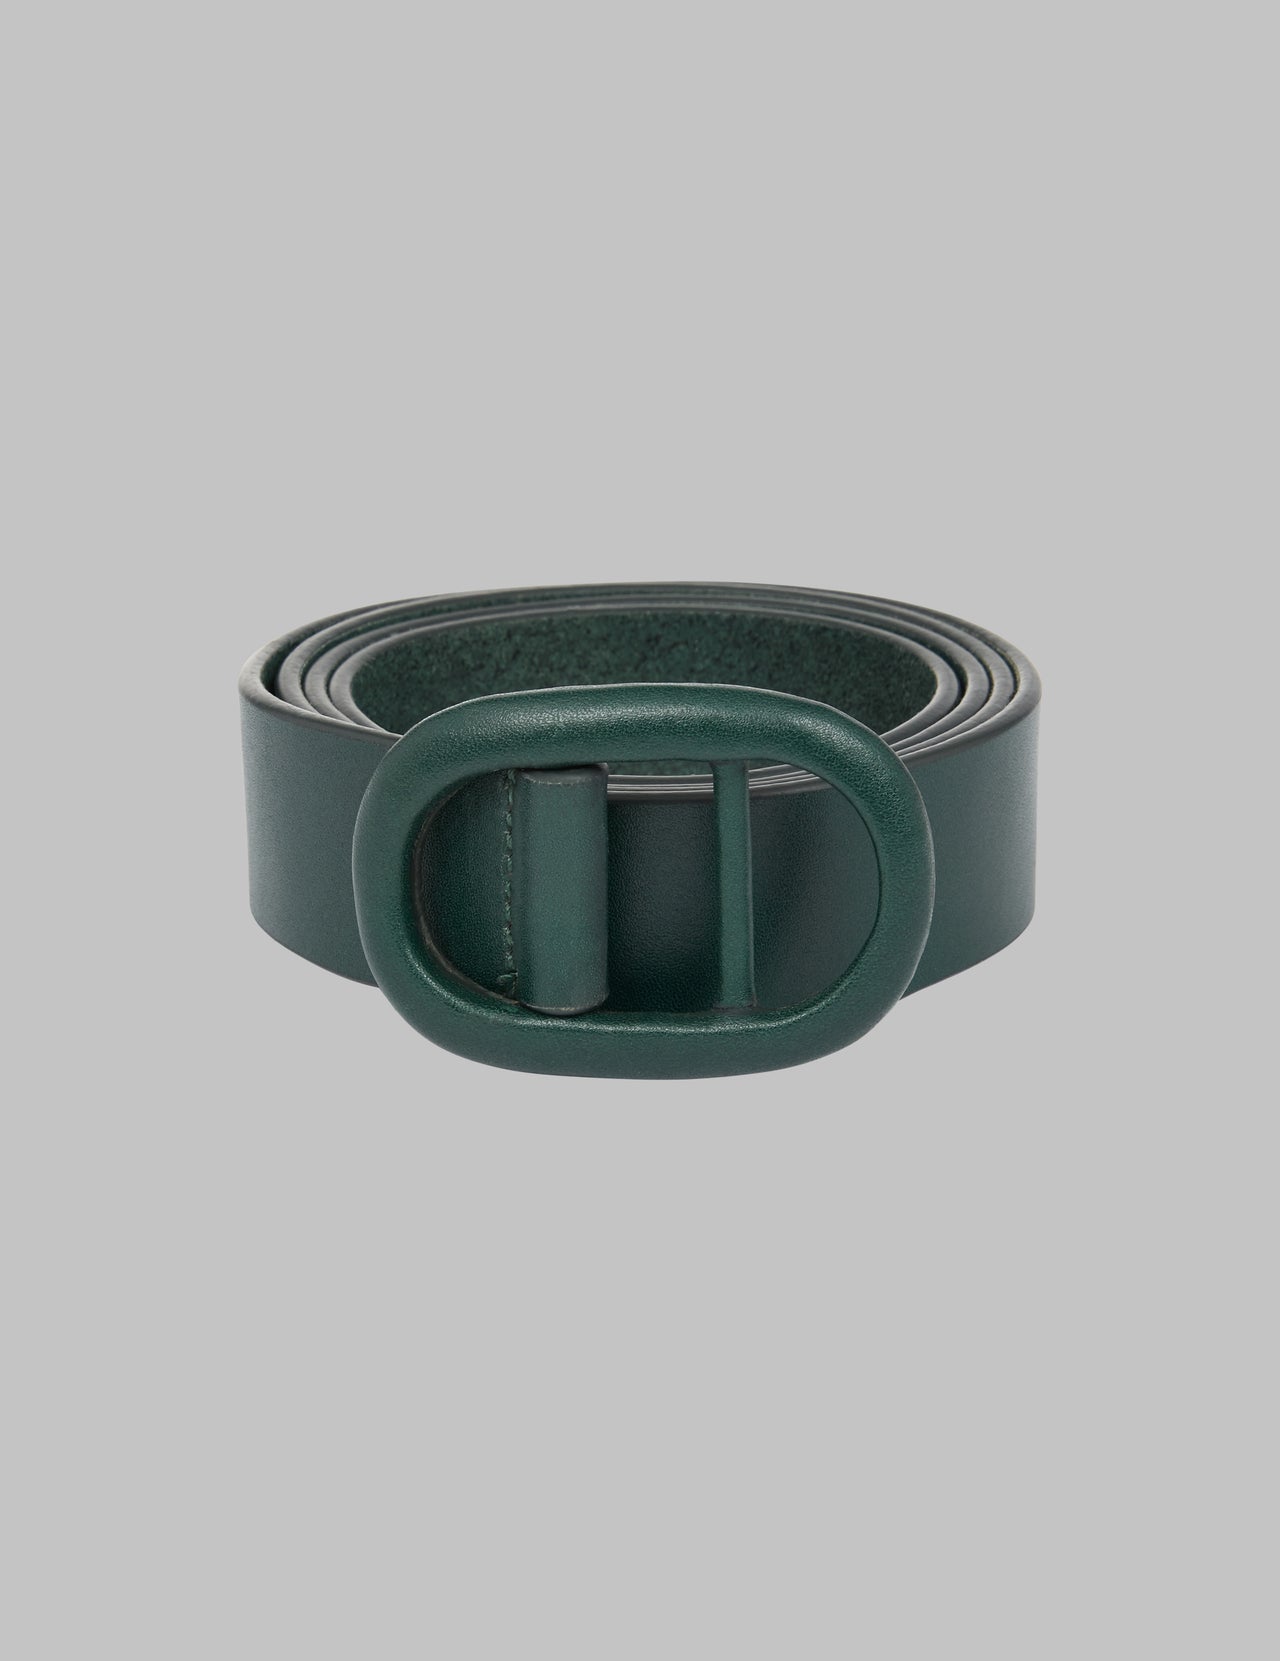  Green Leather Oval Buckle Belt  